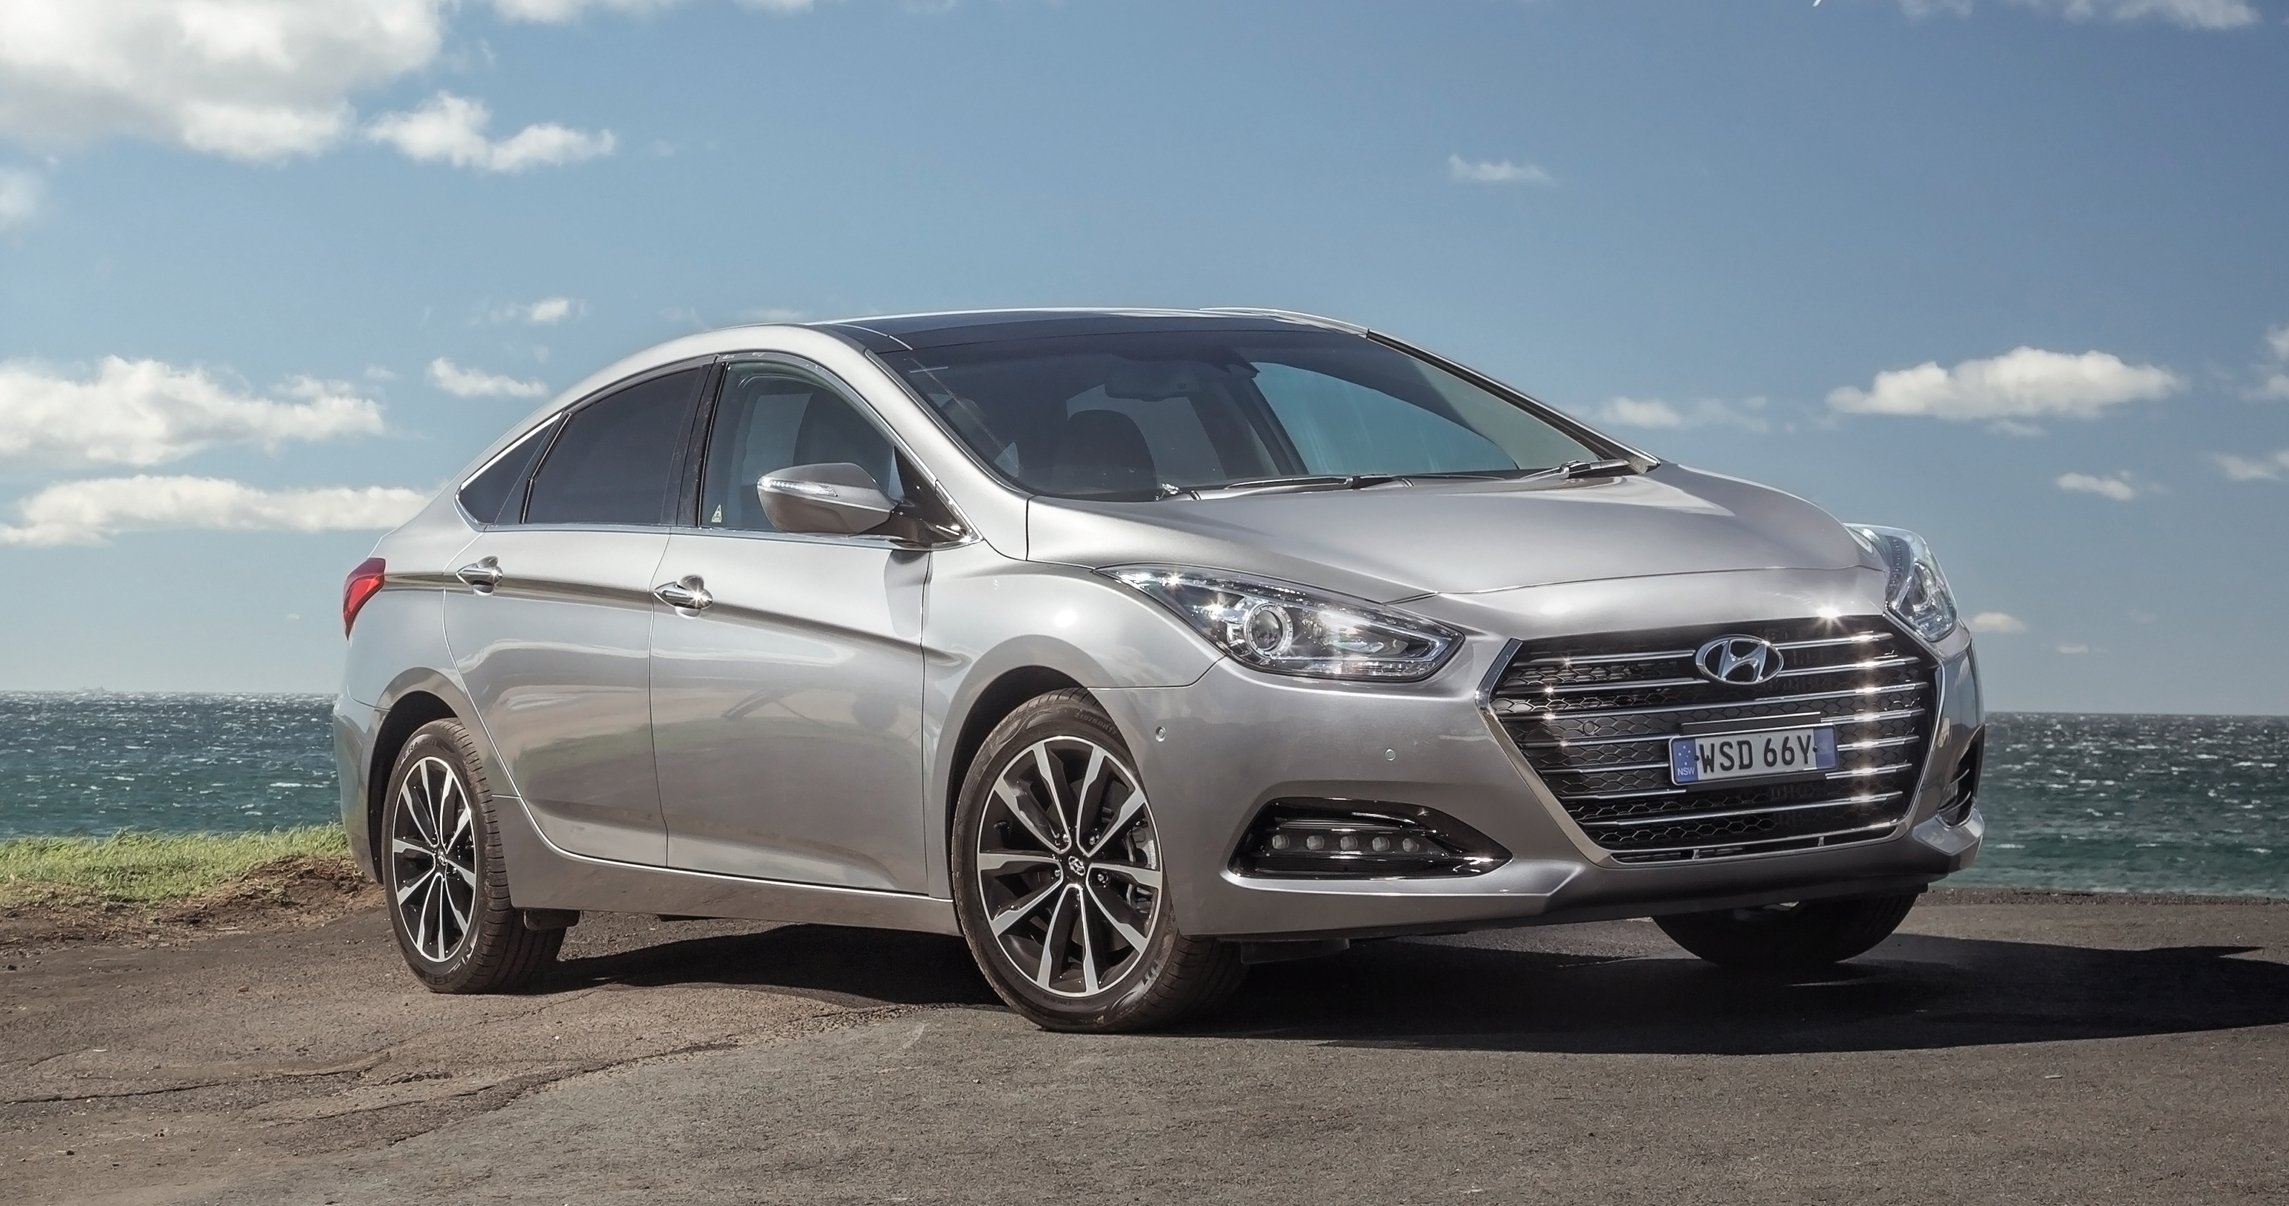 2015 Hyundai i40 Review photos CarAdvice